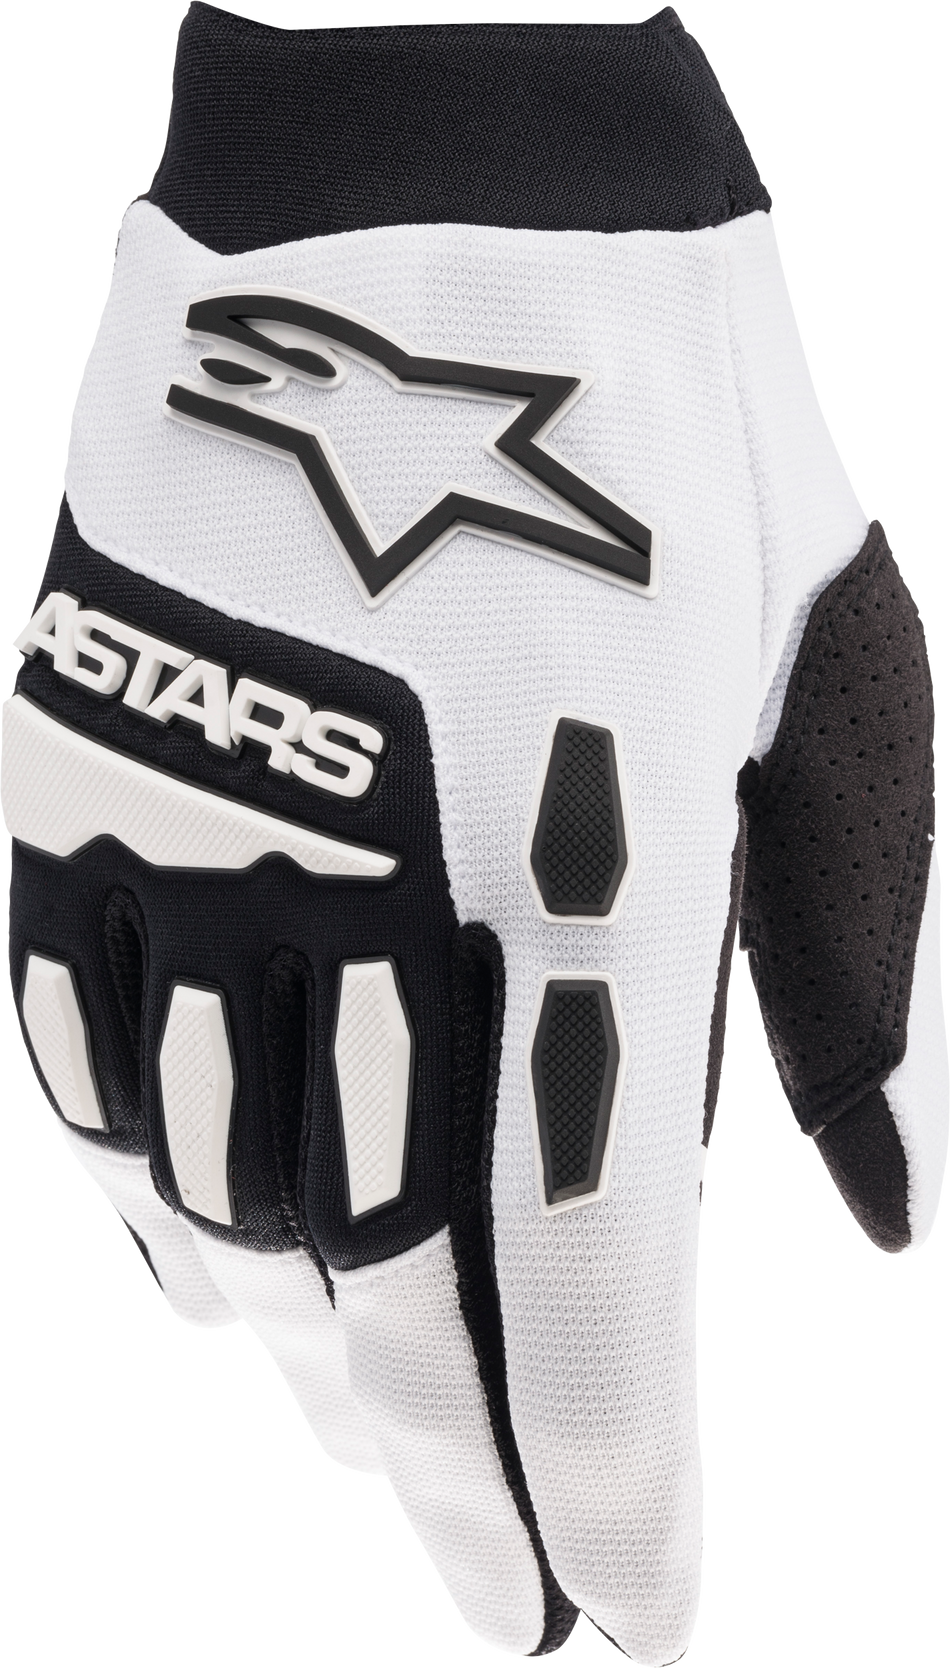 ALPINESTARS Full Bore Gloves White/Black Lg 3563622-21-L